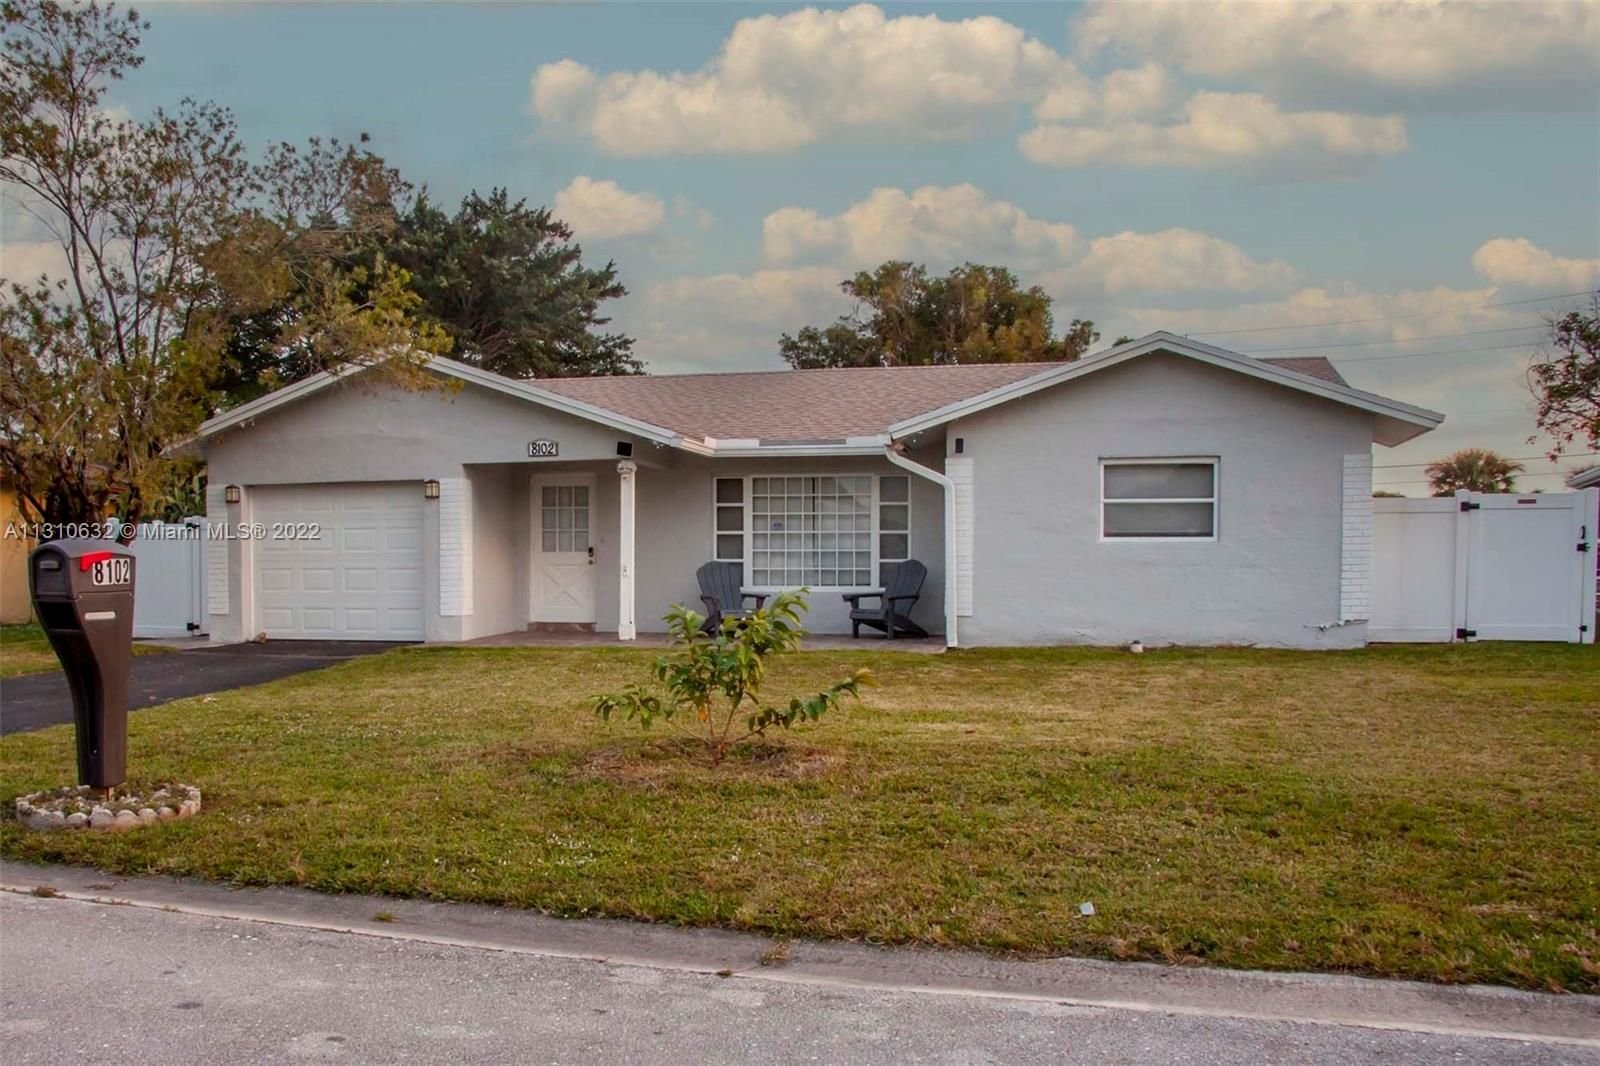 Real estate property located at 8102 91st Ave, Broward County, Tamarac, FL